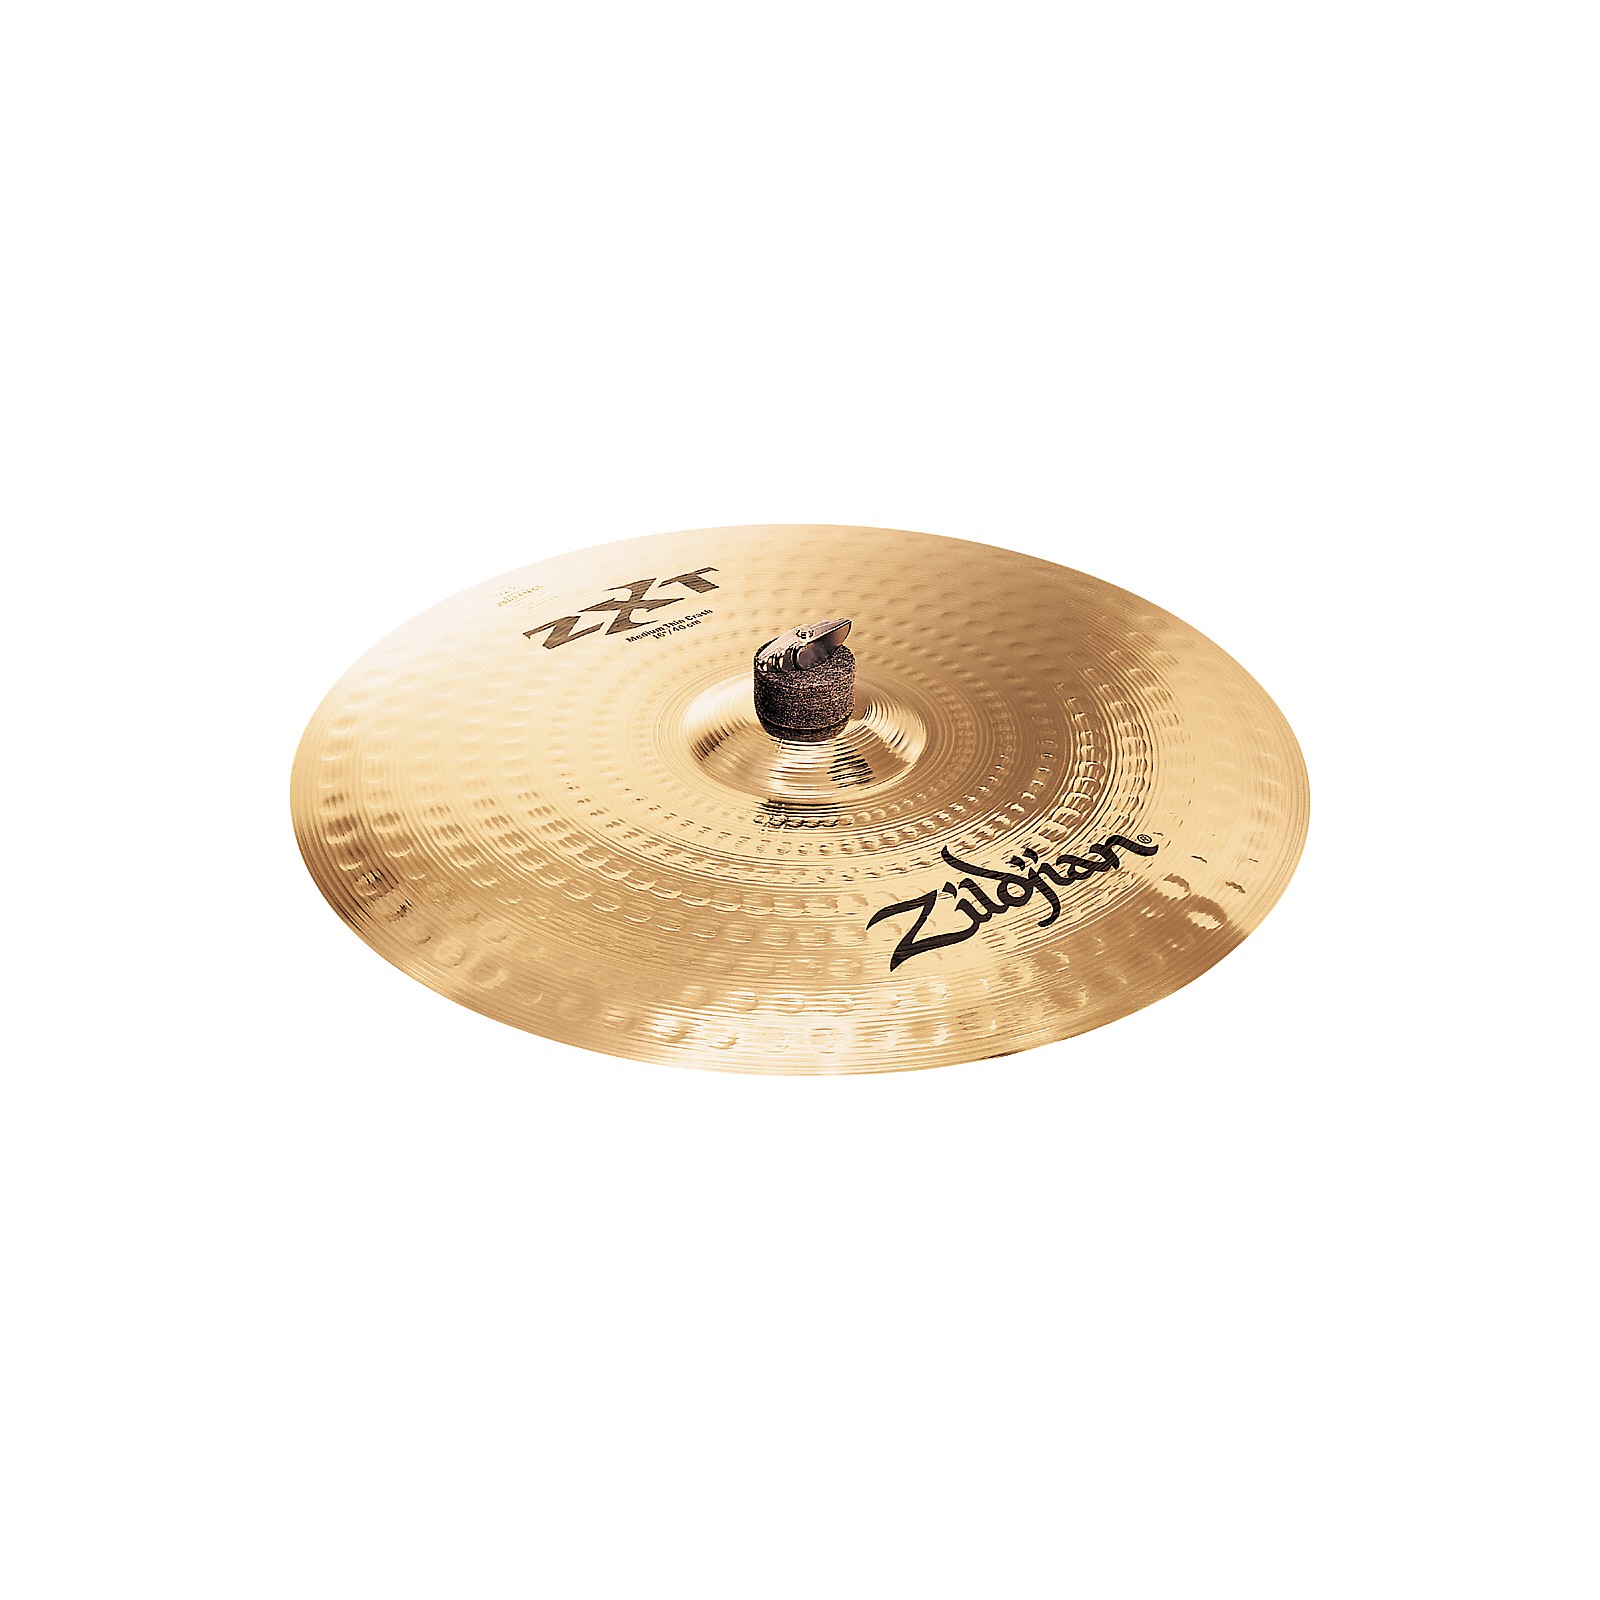 Zildjian ZXT Medium-Thin Crash Cymbal 16 Inches